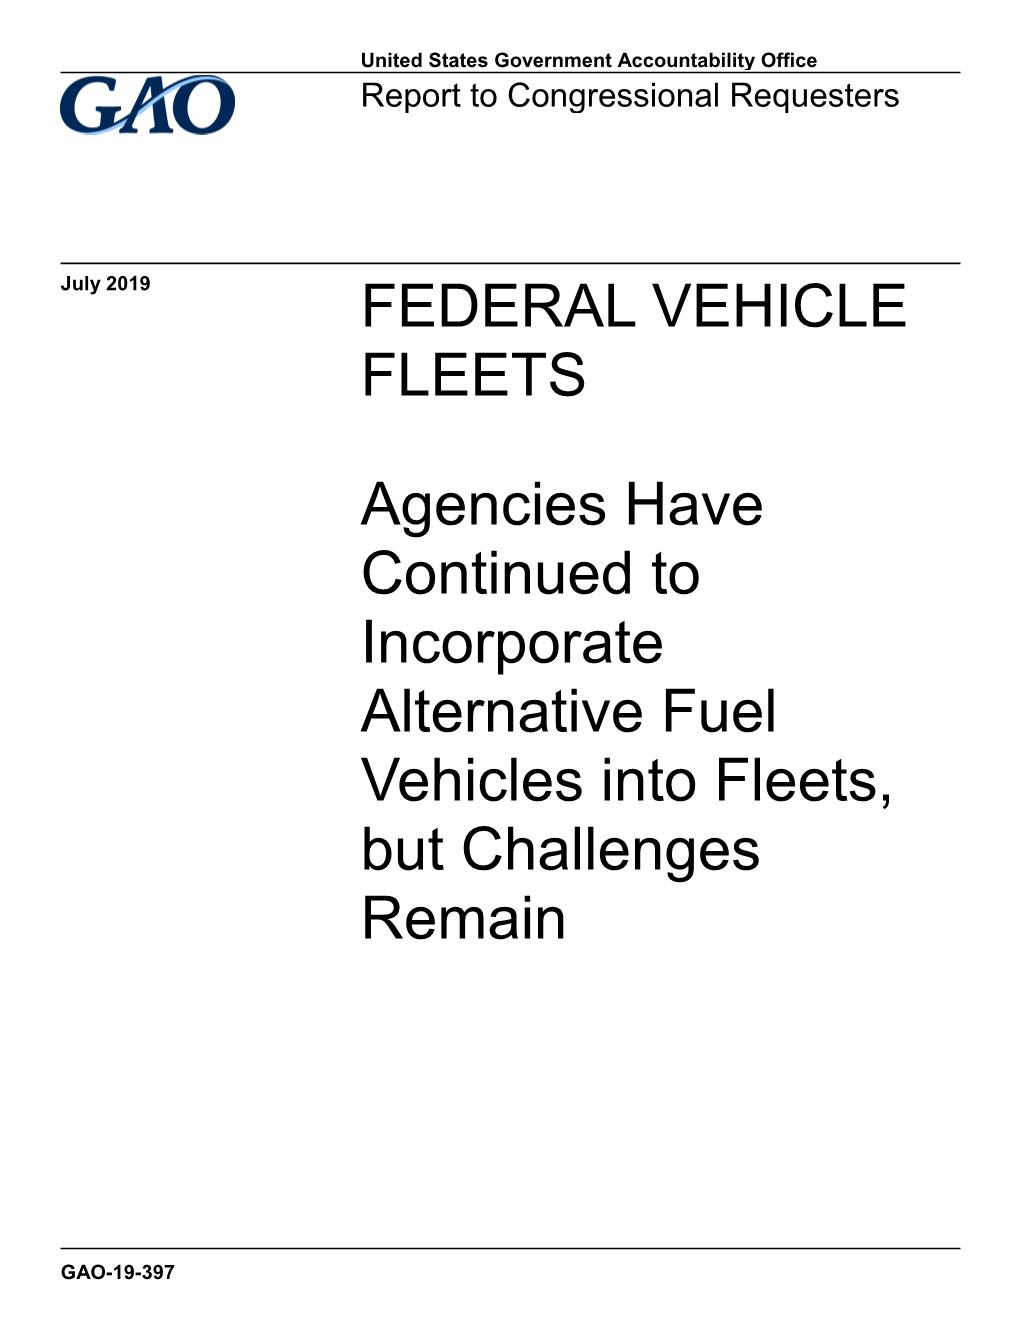 Gao-19-397, Federal Vehicle Fleets